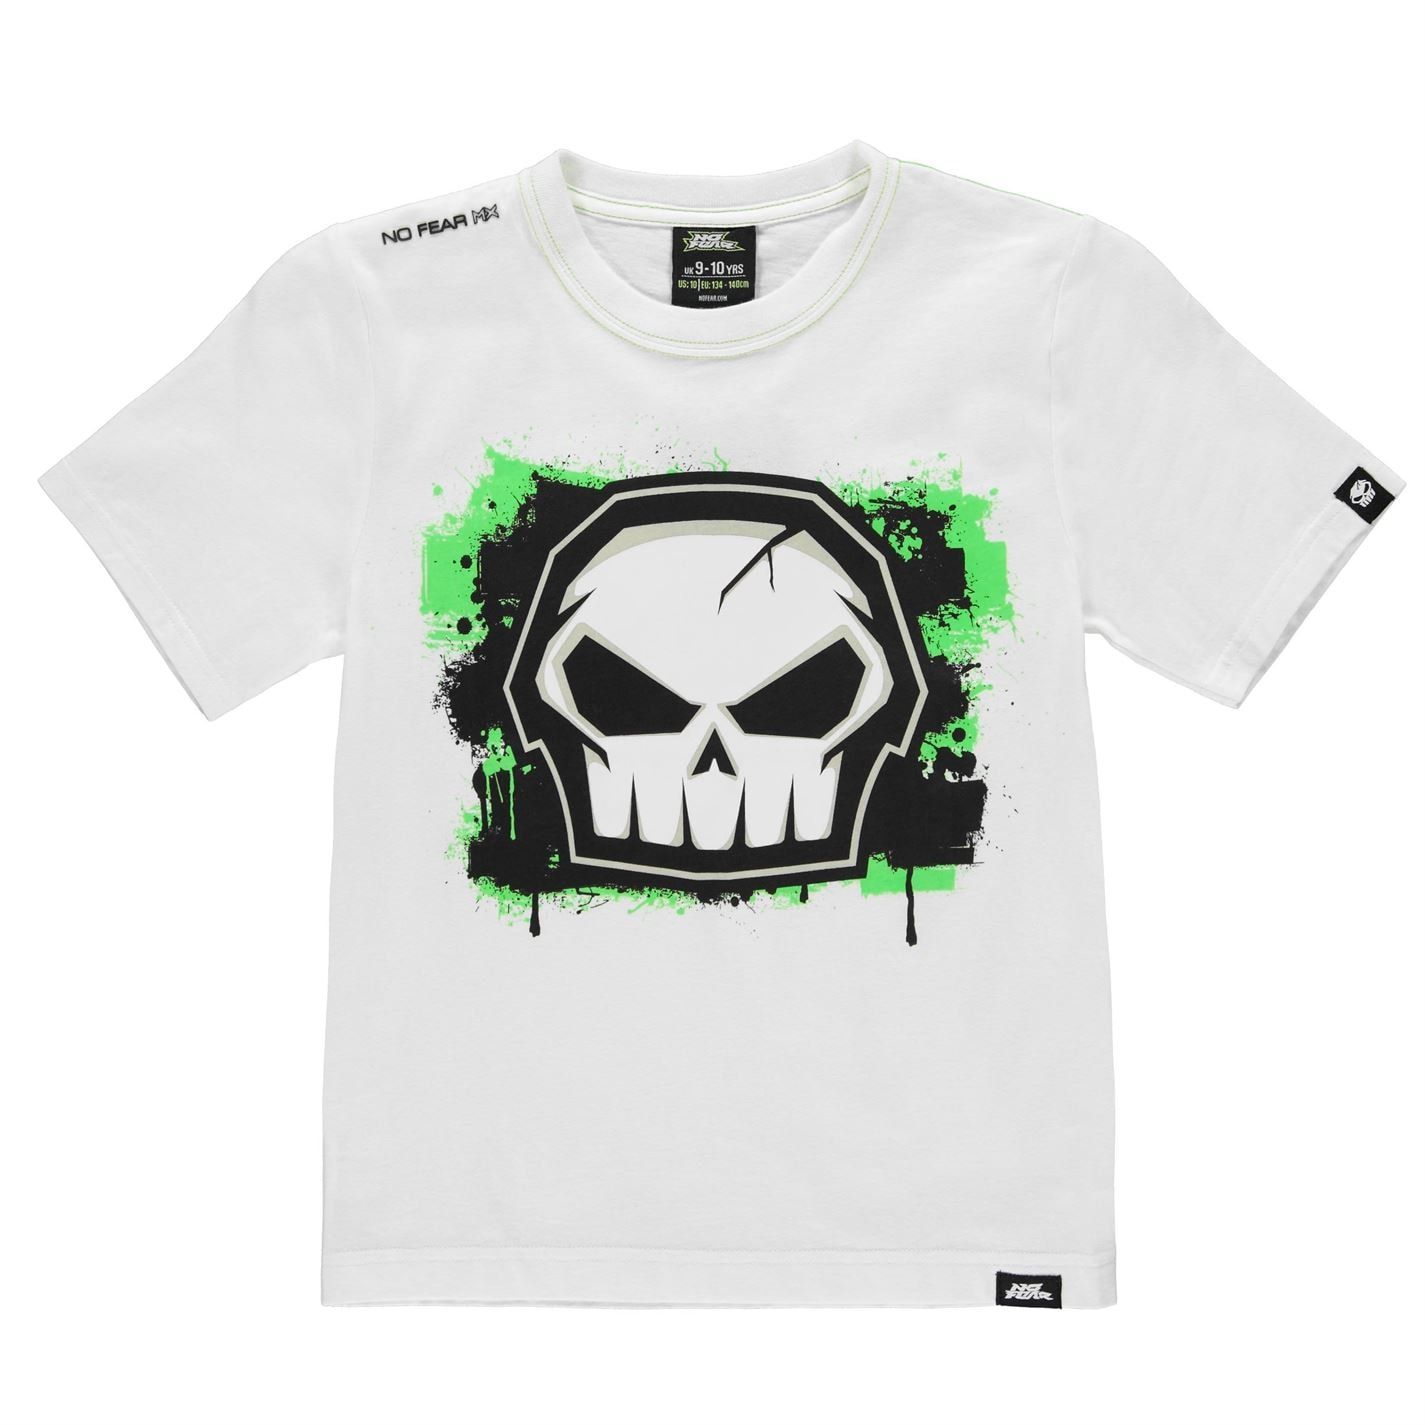 No Fear Kids Junior Boys Core Graphic T Shirt Short Sleeve Crew Neck Tee Top